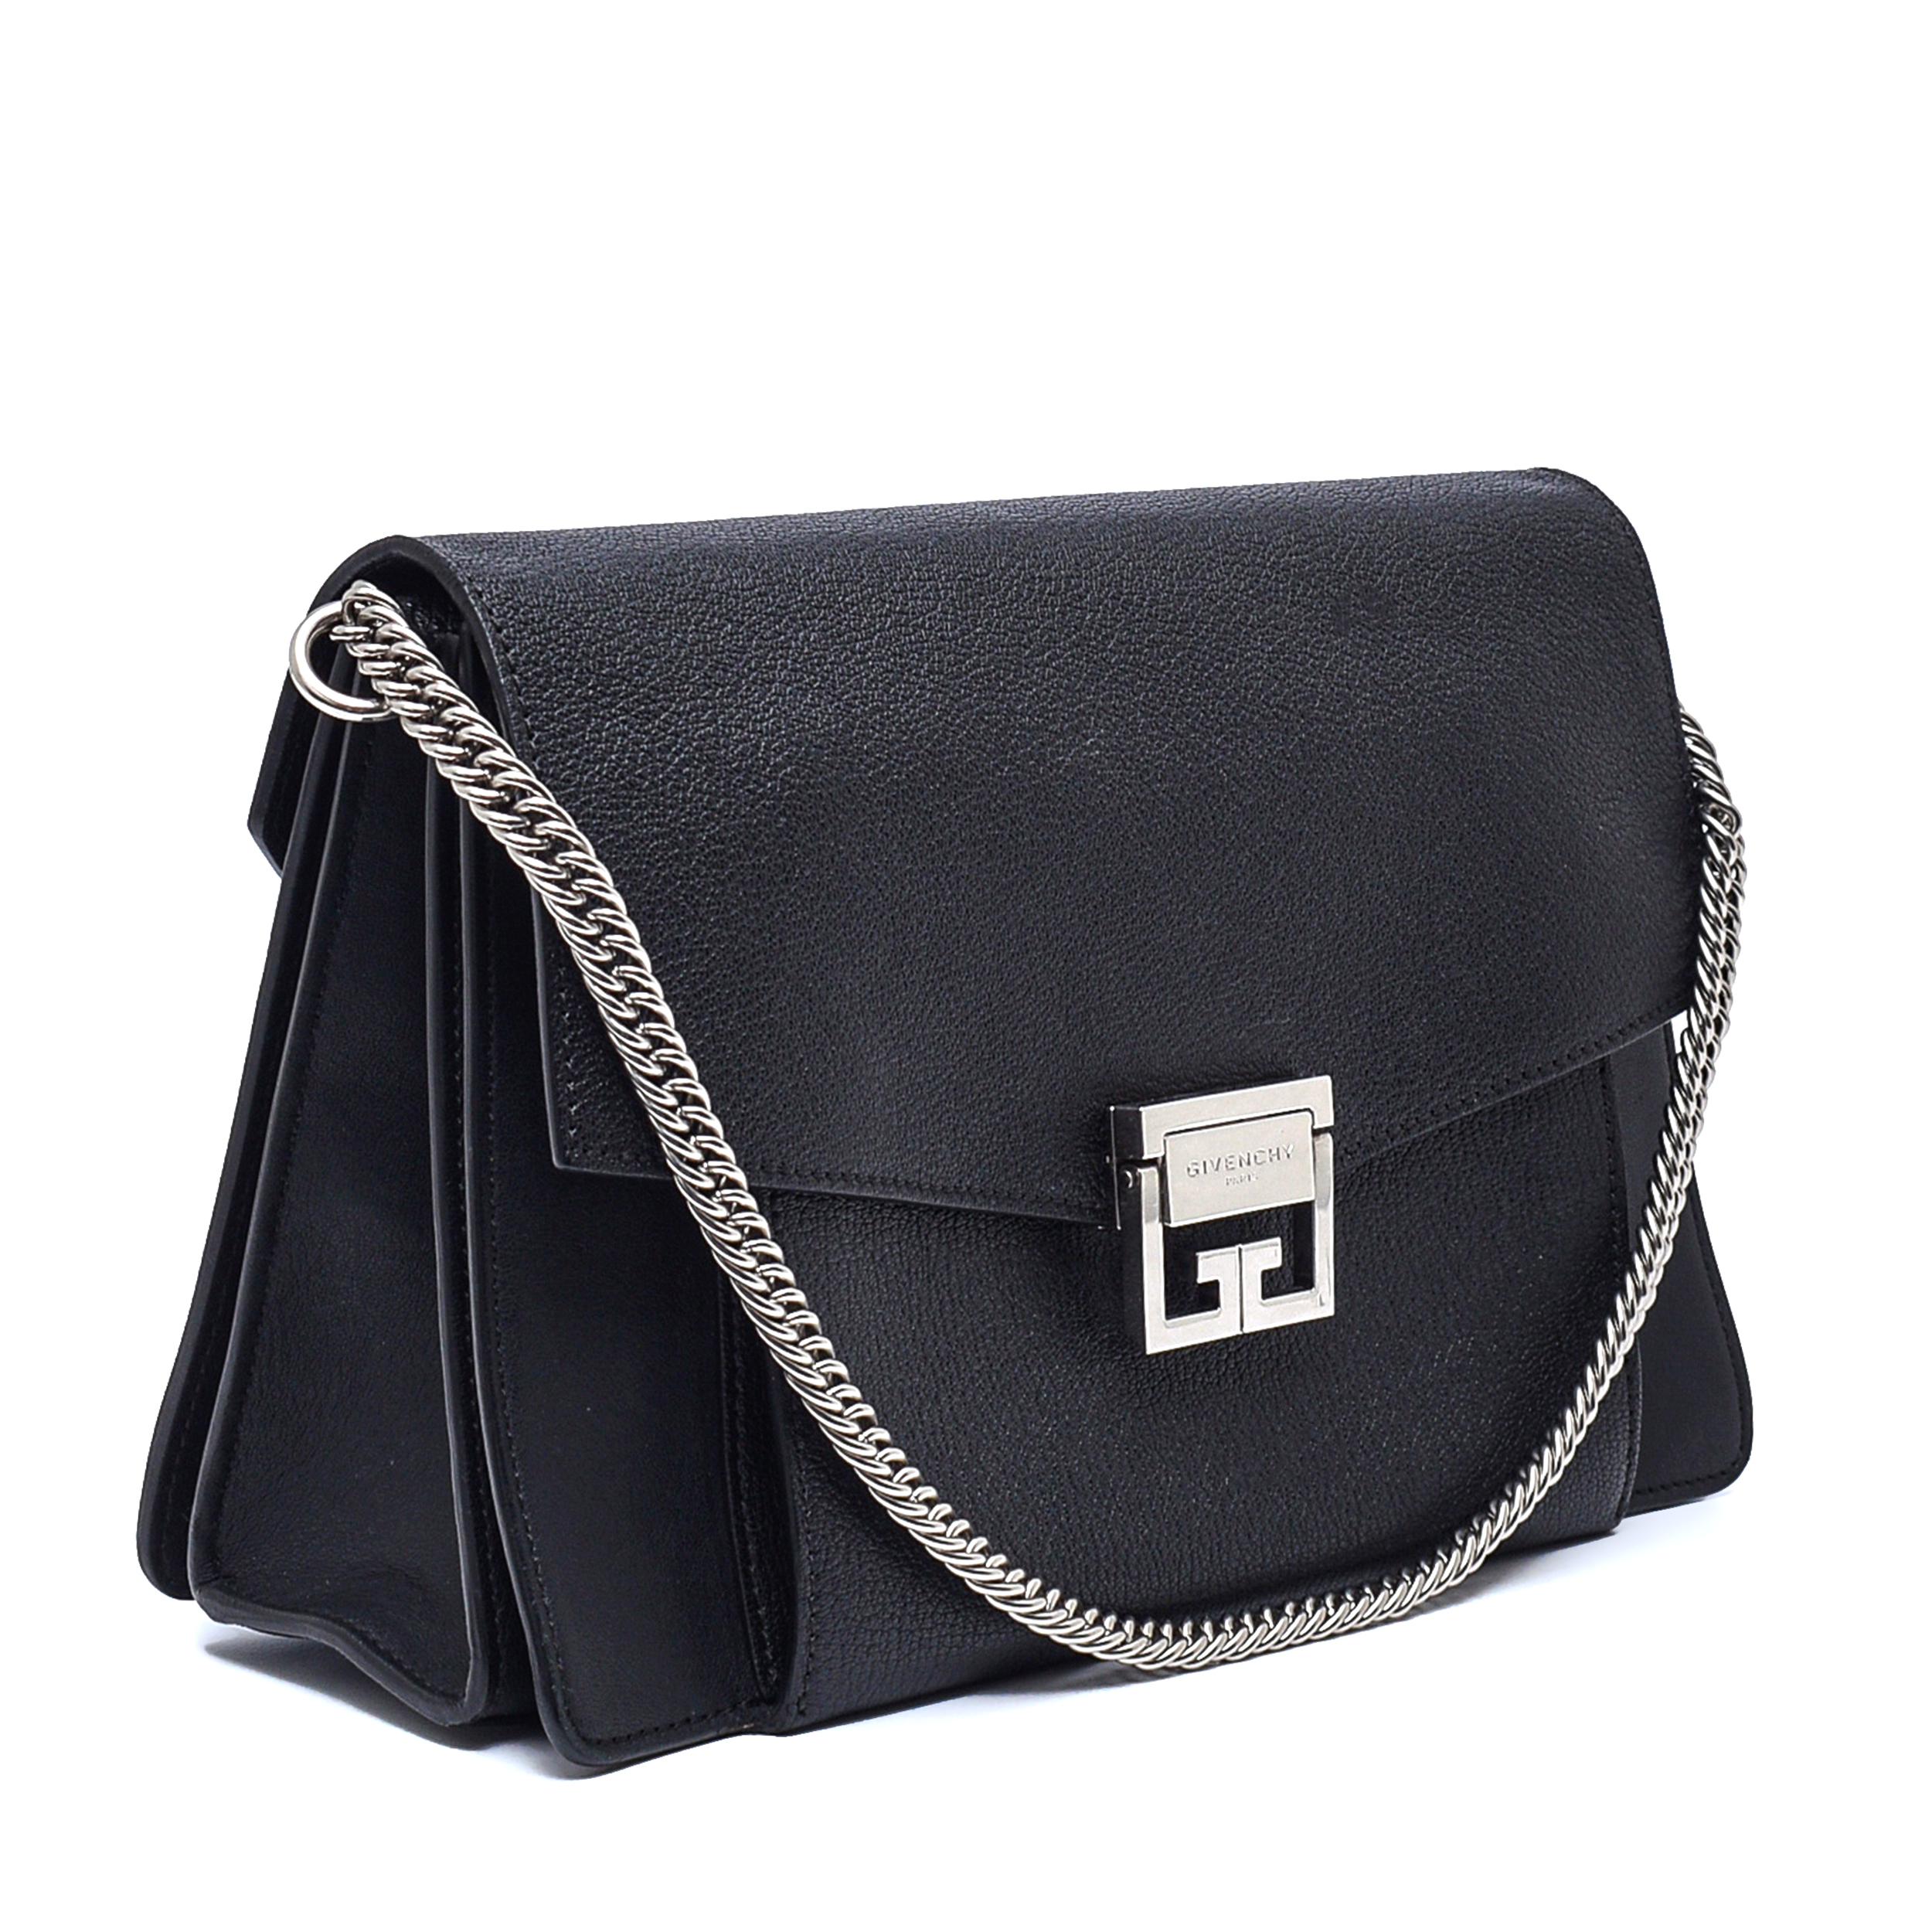 Givenchy - Black Leather Medium GV3 Bag